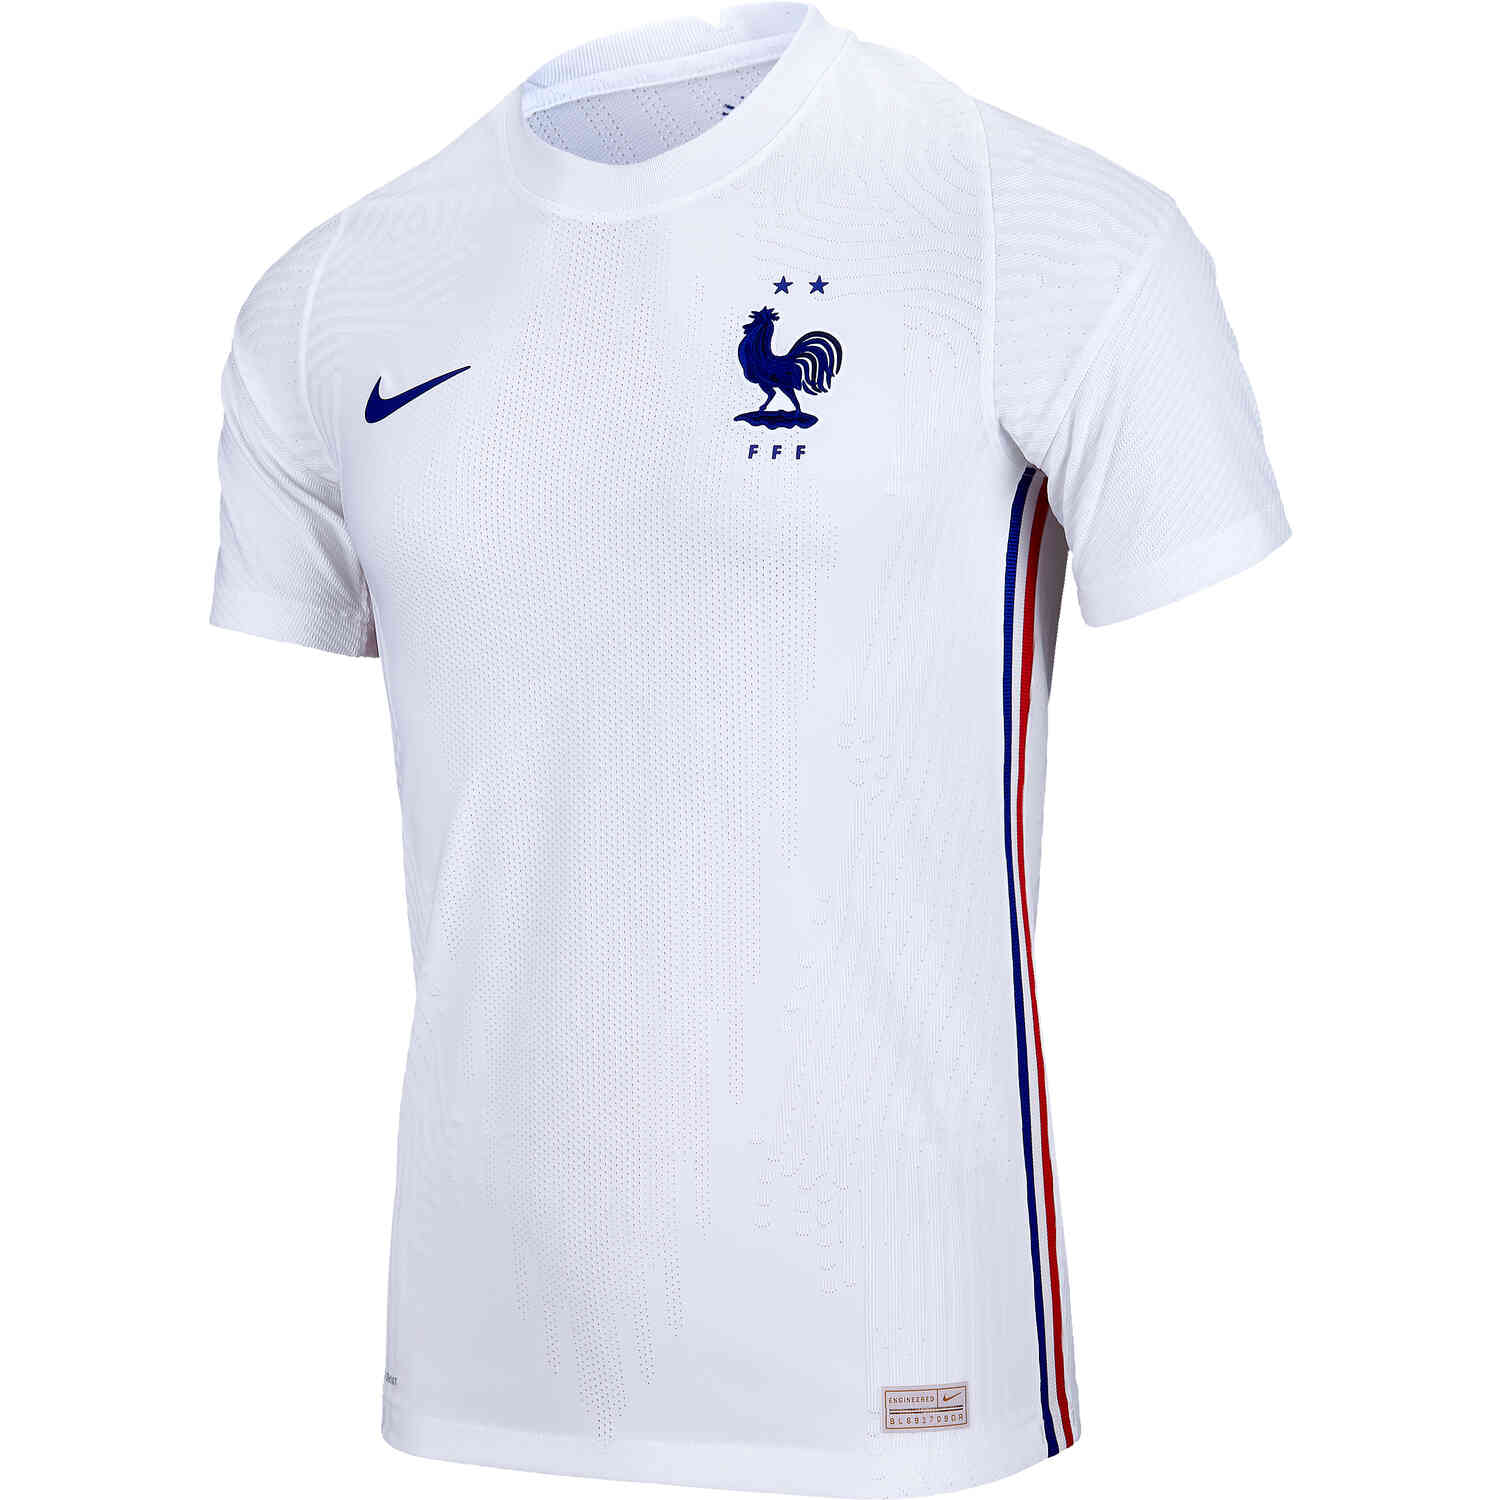 2020 Nike France Away Match Jersey - Soccer Master